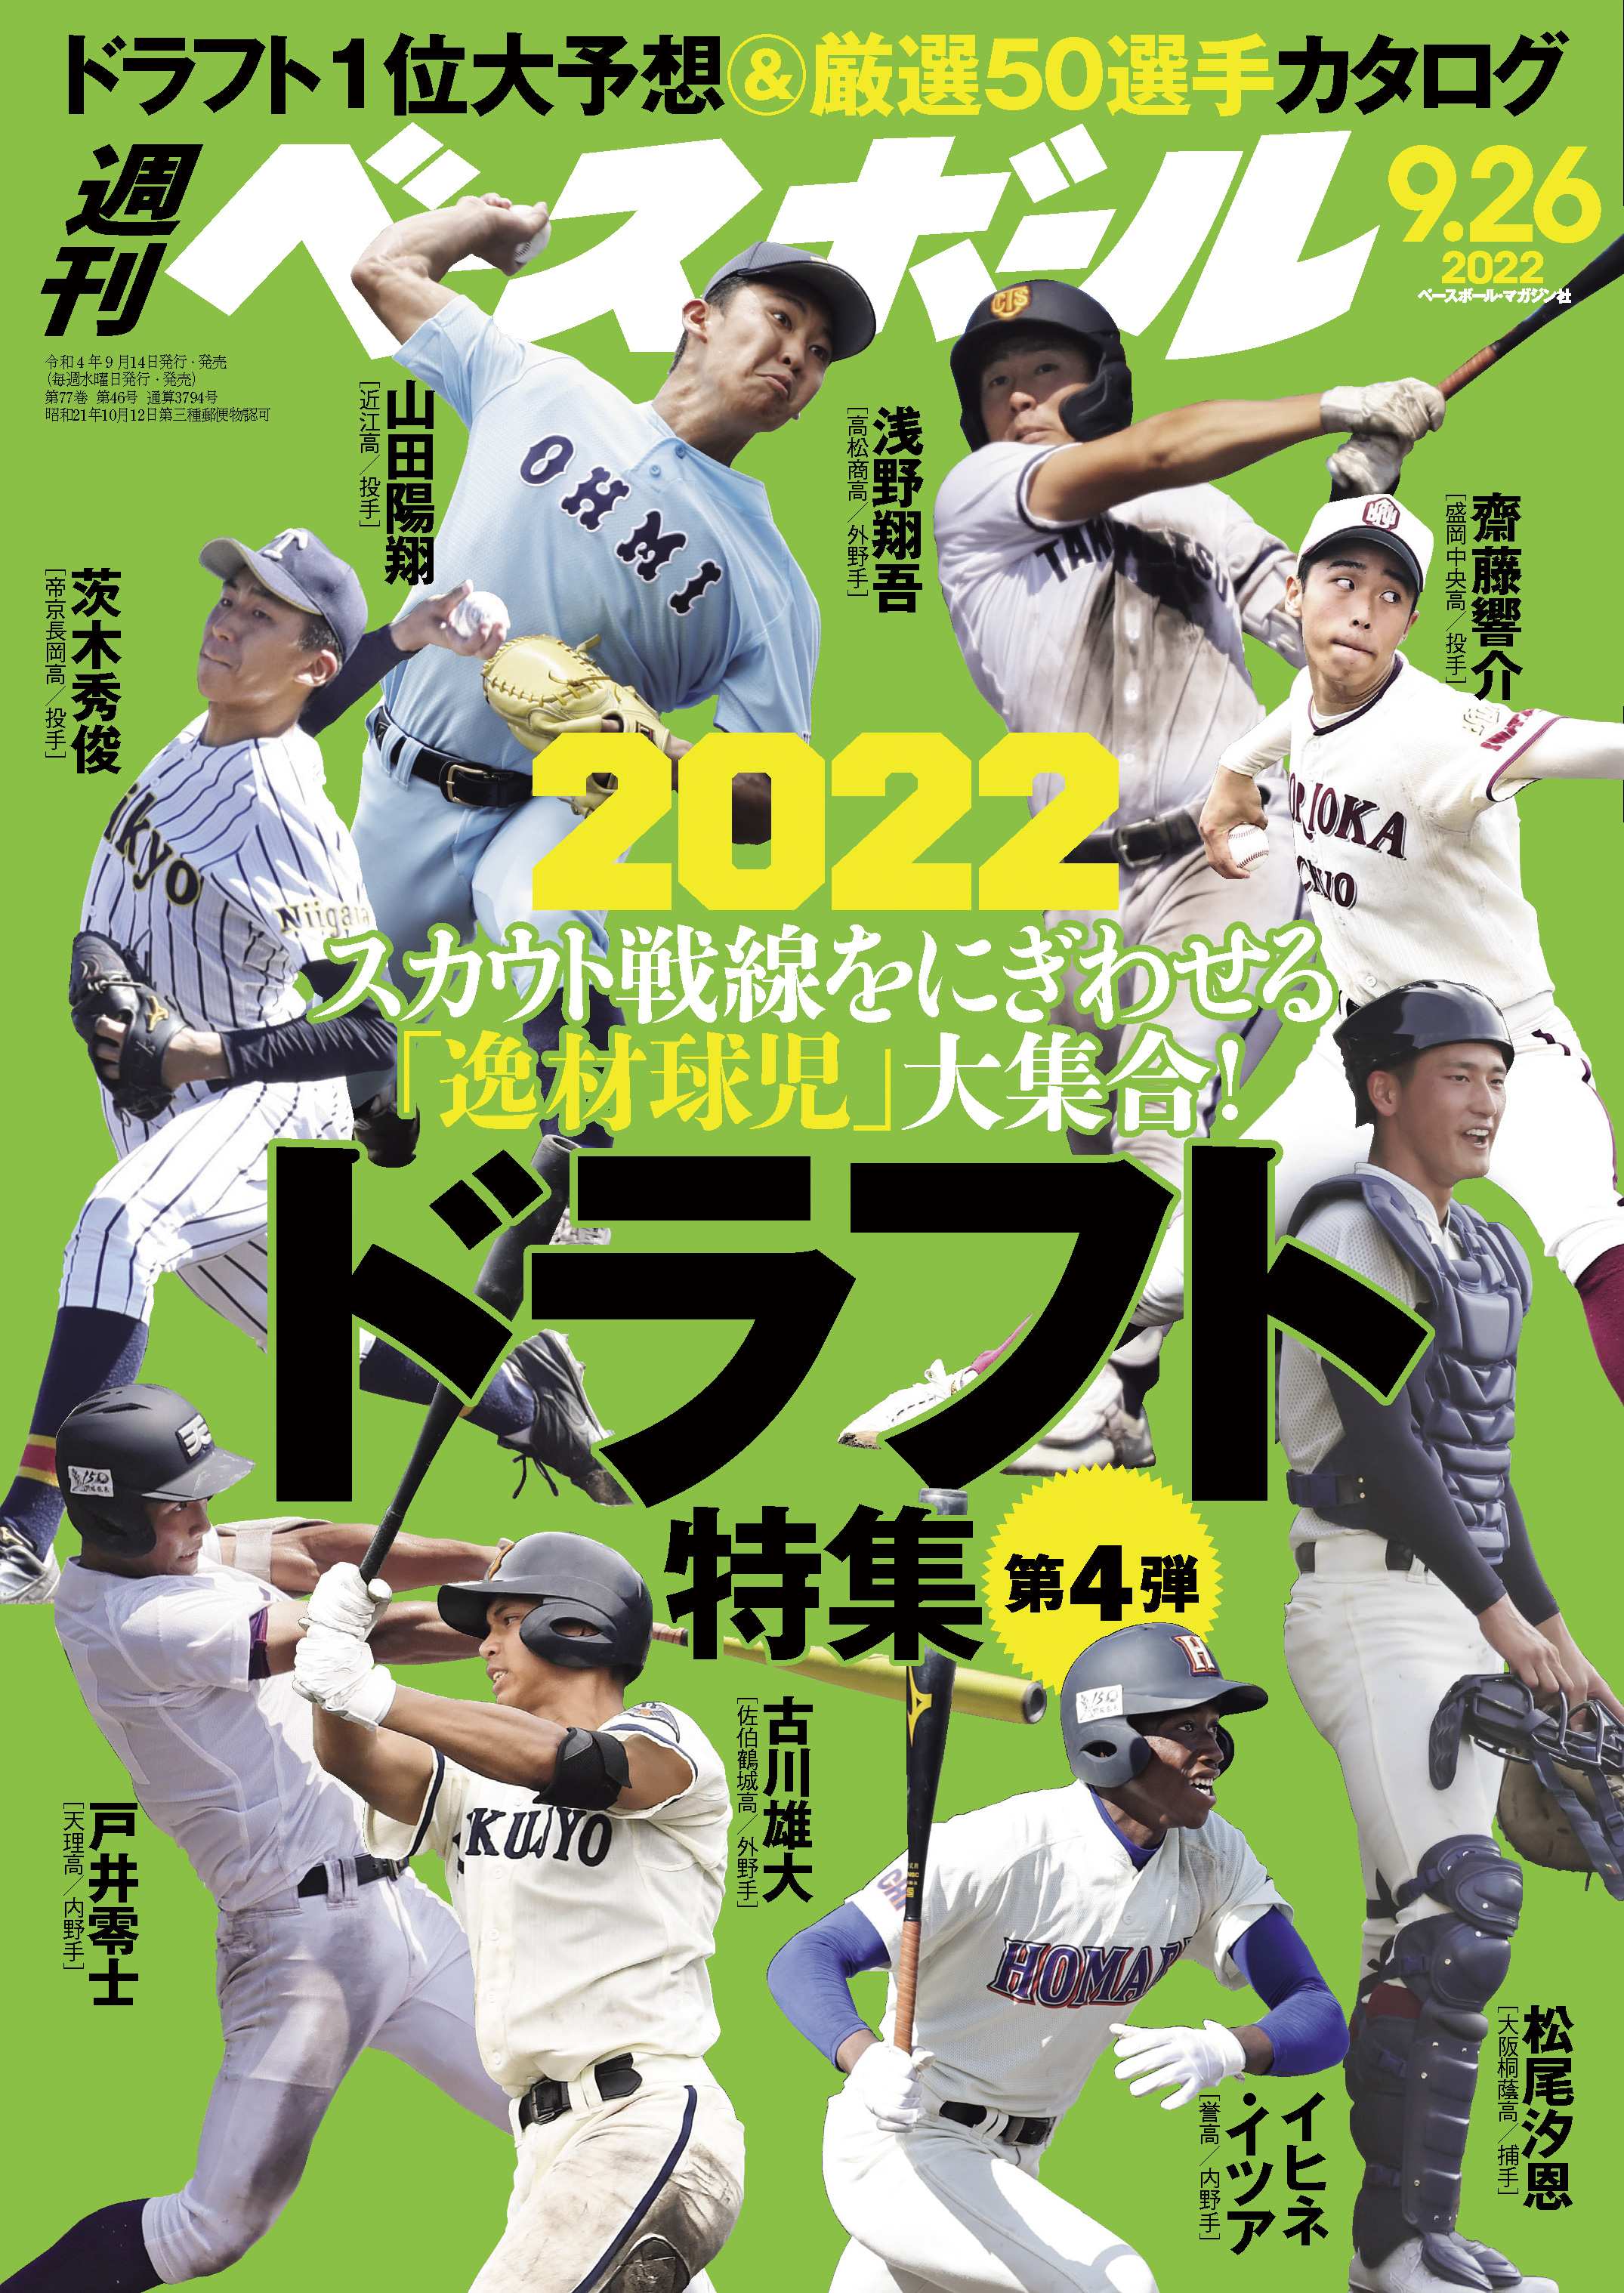 SMBC日本シリーズ 2022 公式球 第6戦 ファールボール - 野球